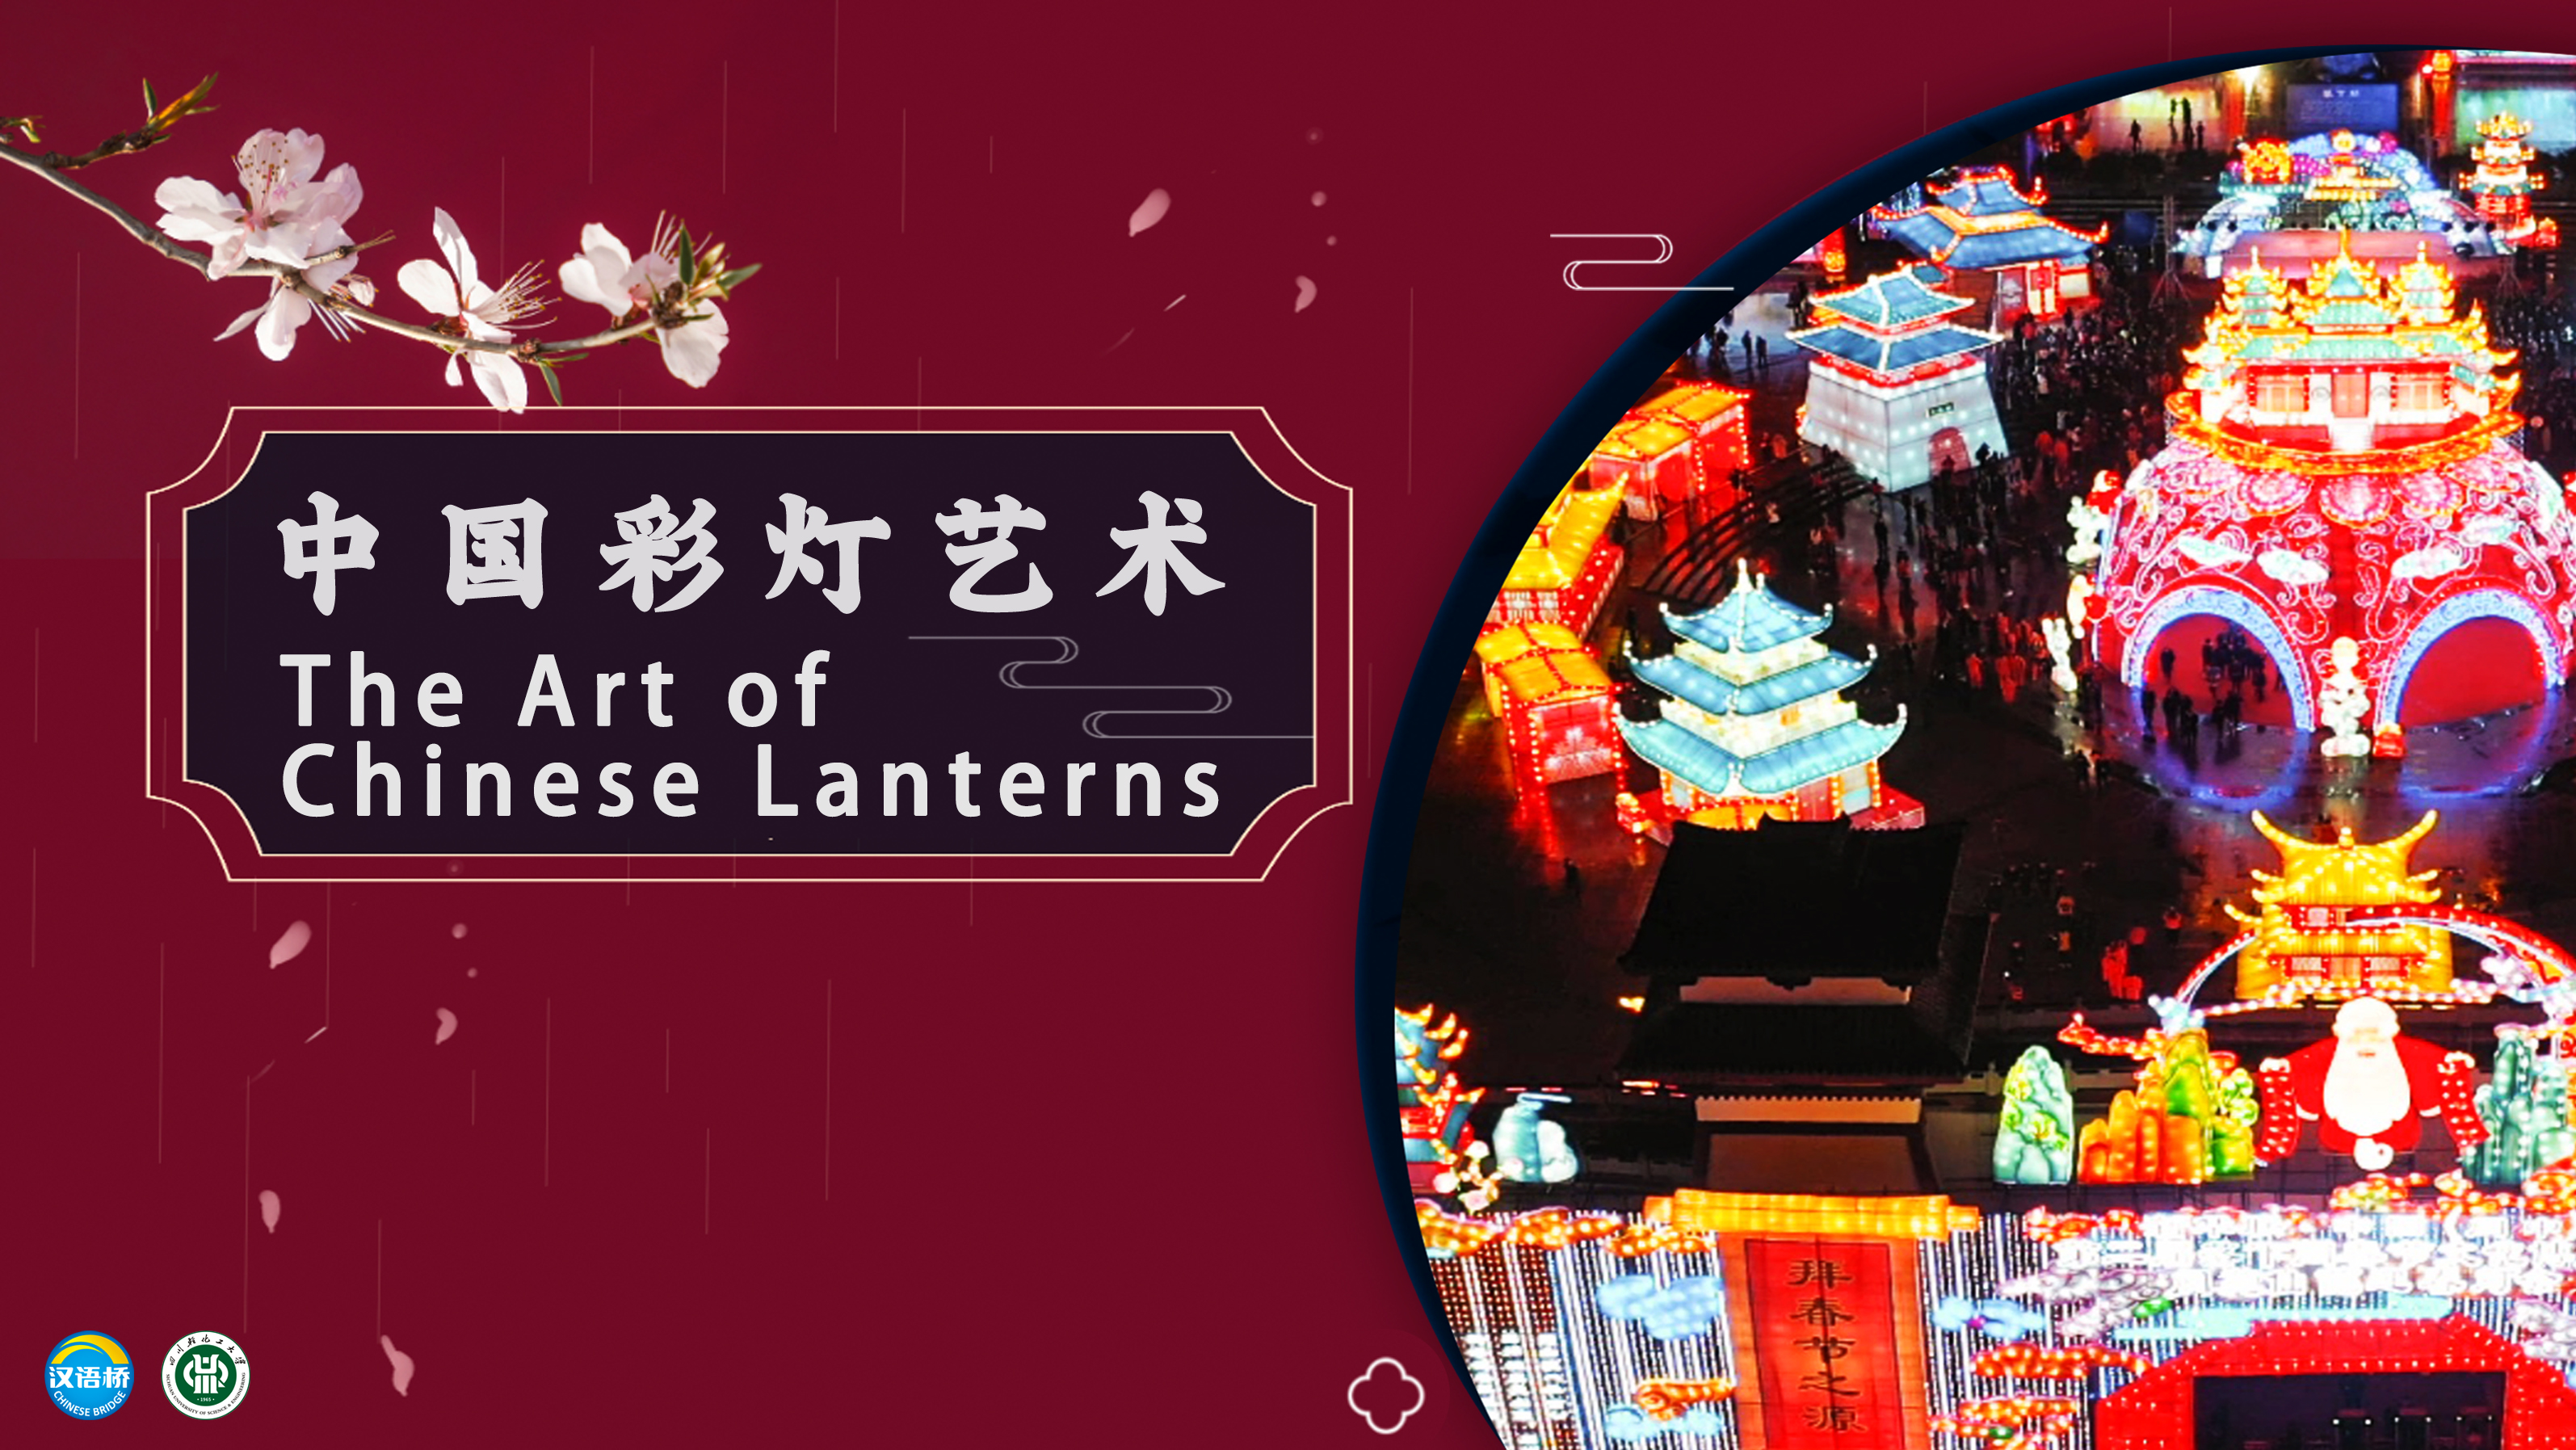 The Art of Chinese Lanterns